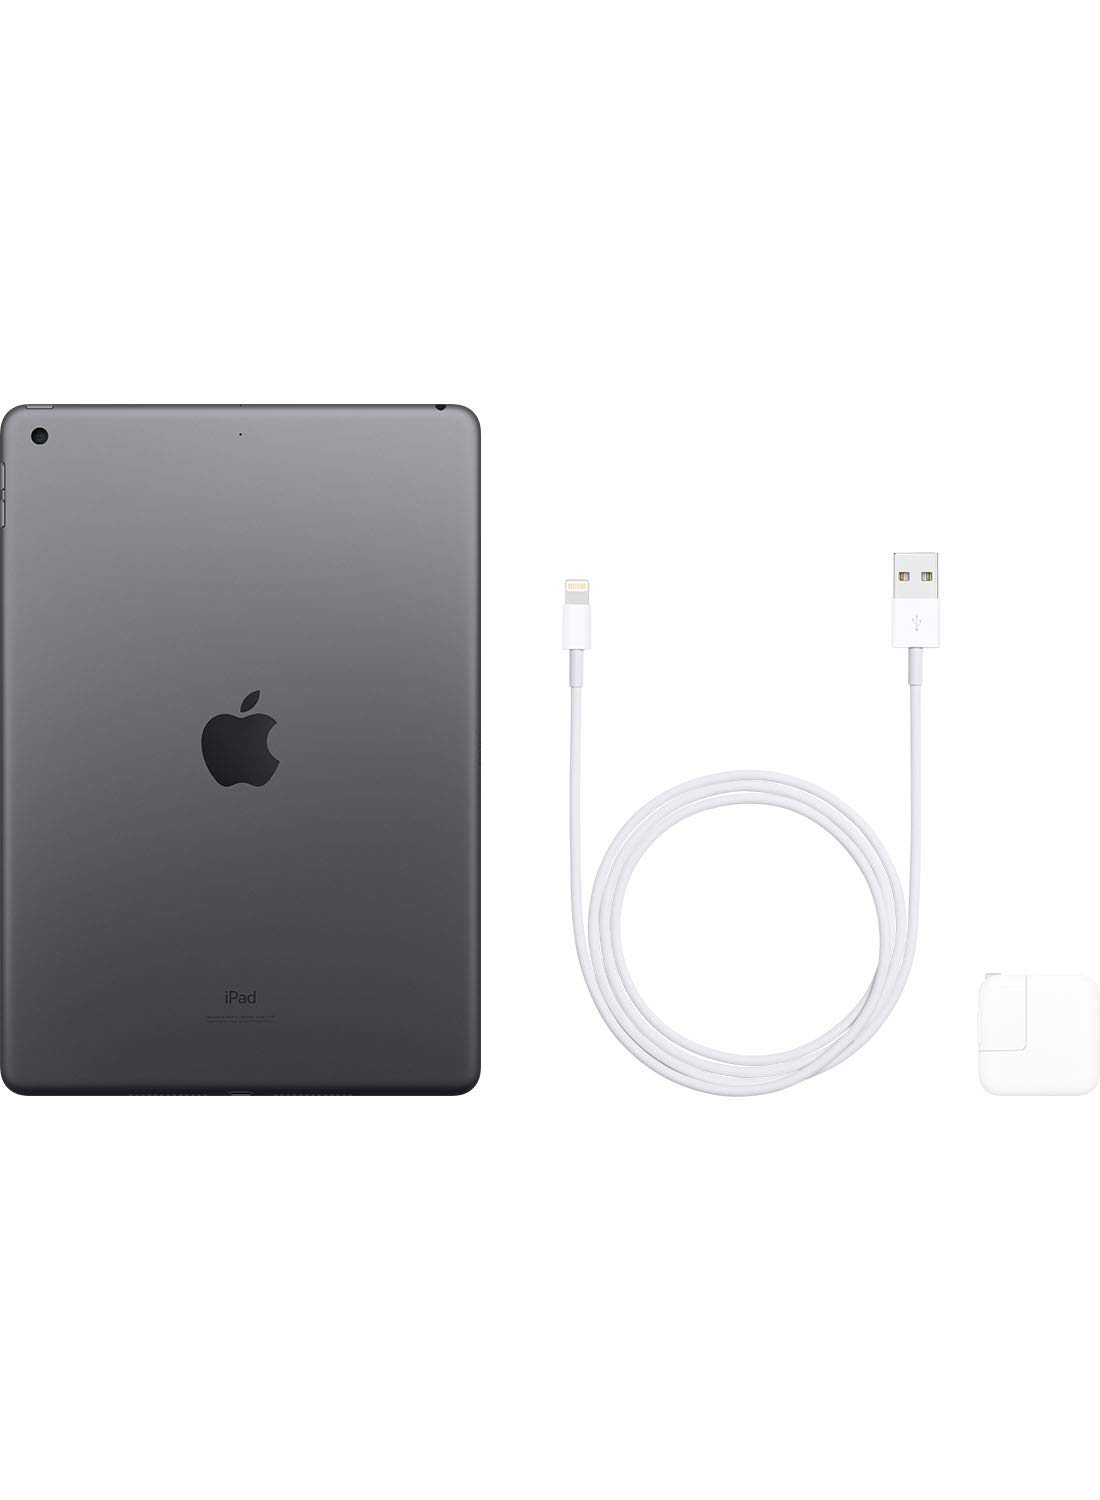 Apple iPad (10.2-inch, Wi-Fi, 32GB) - Space Gray (Previous Model)